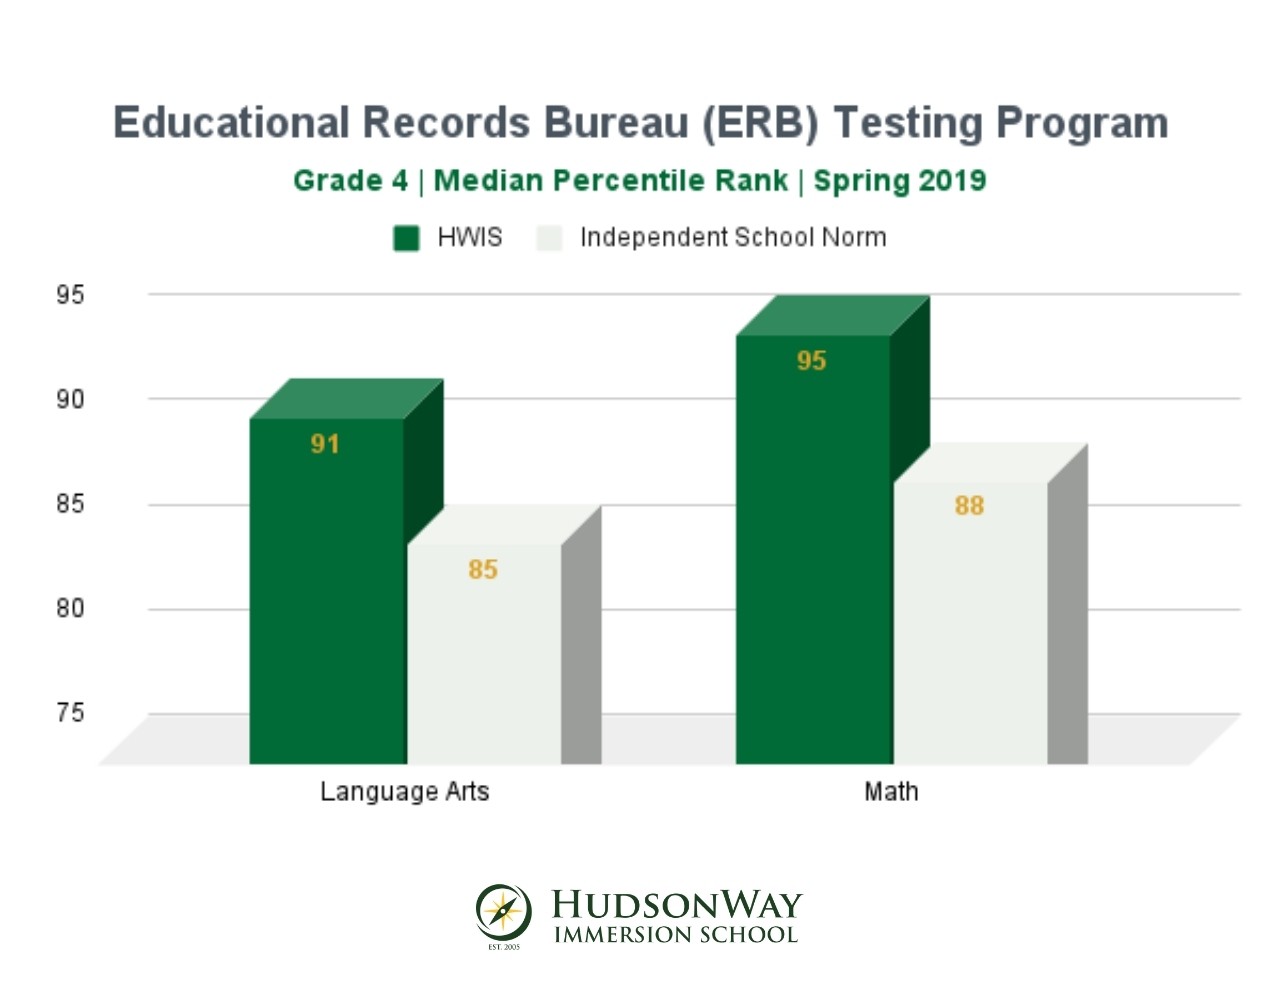 Educational Record Bureau (ERB) Comprehensive Testing Program